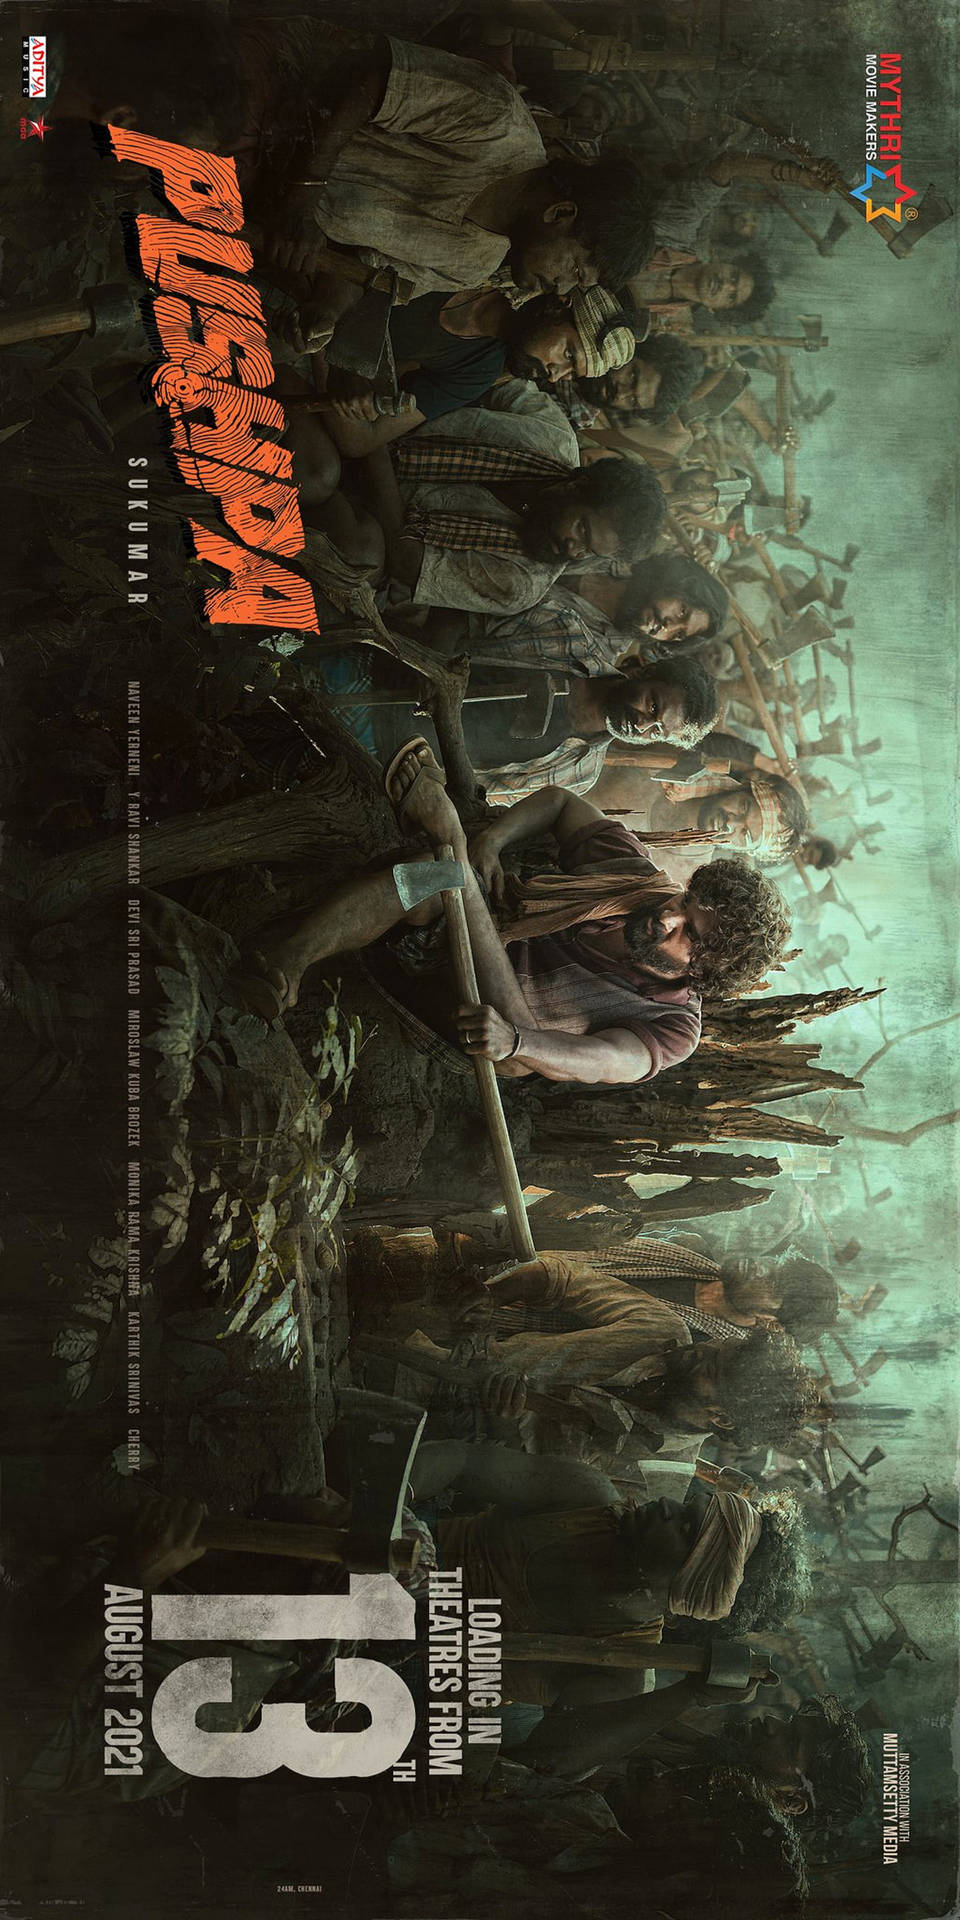 Nuovoemozionante Lancio Del Poster Del Film Pushpa Sfondo